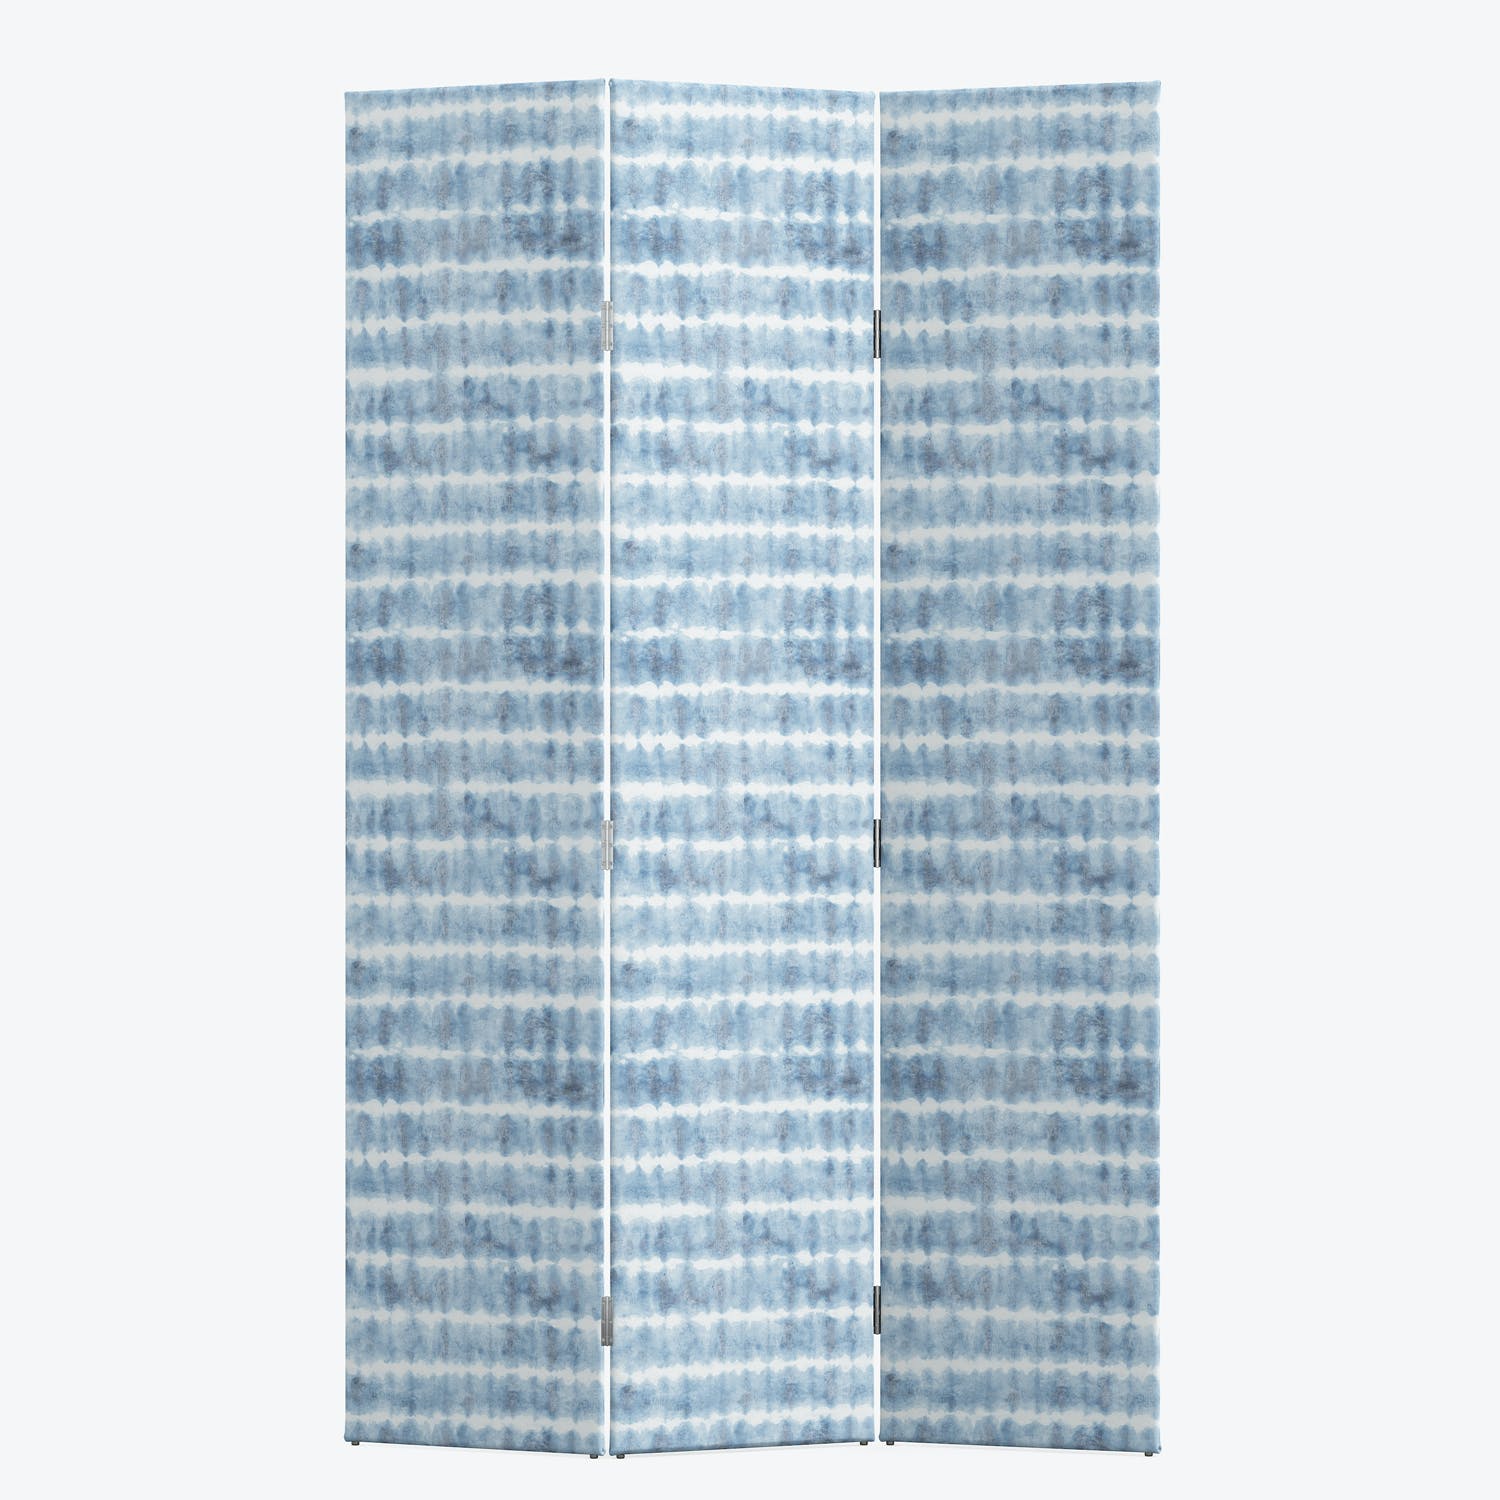 Three-panel folding screen with shibori-inspired blue and white design.